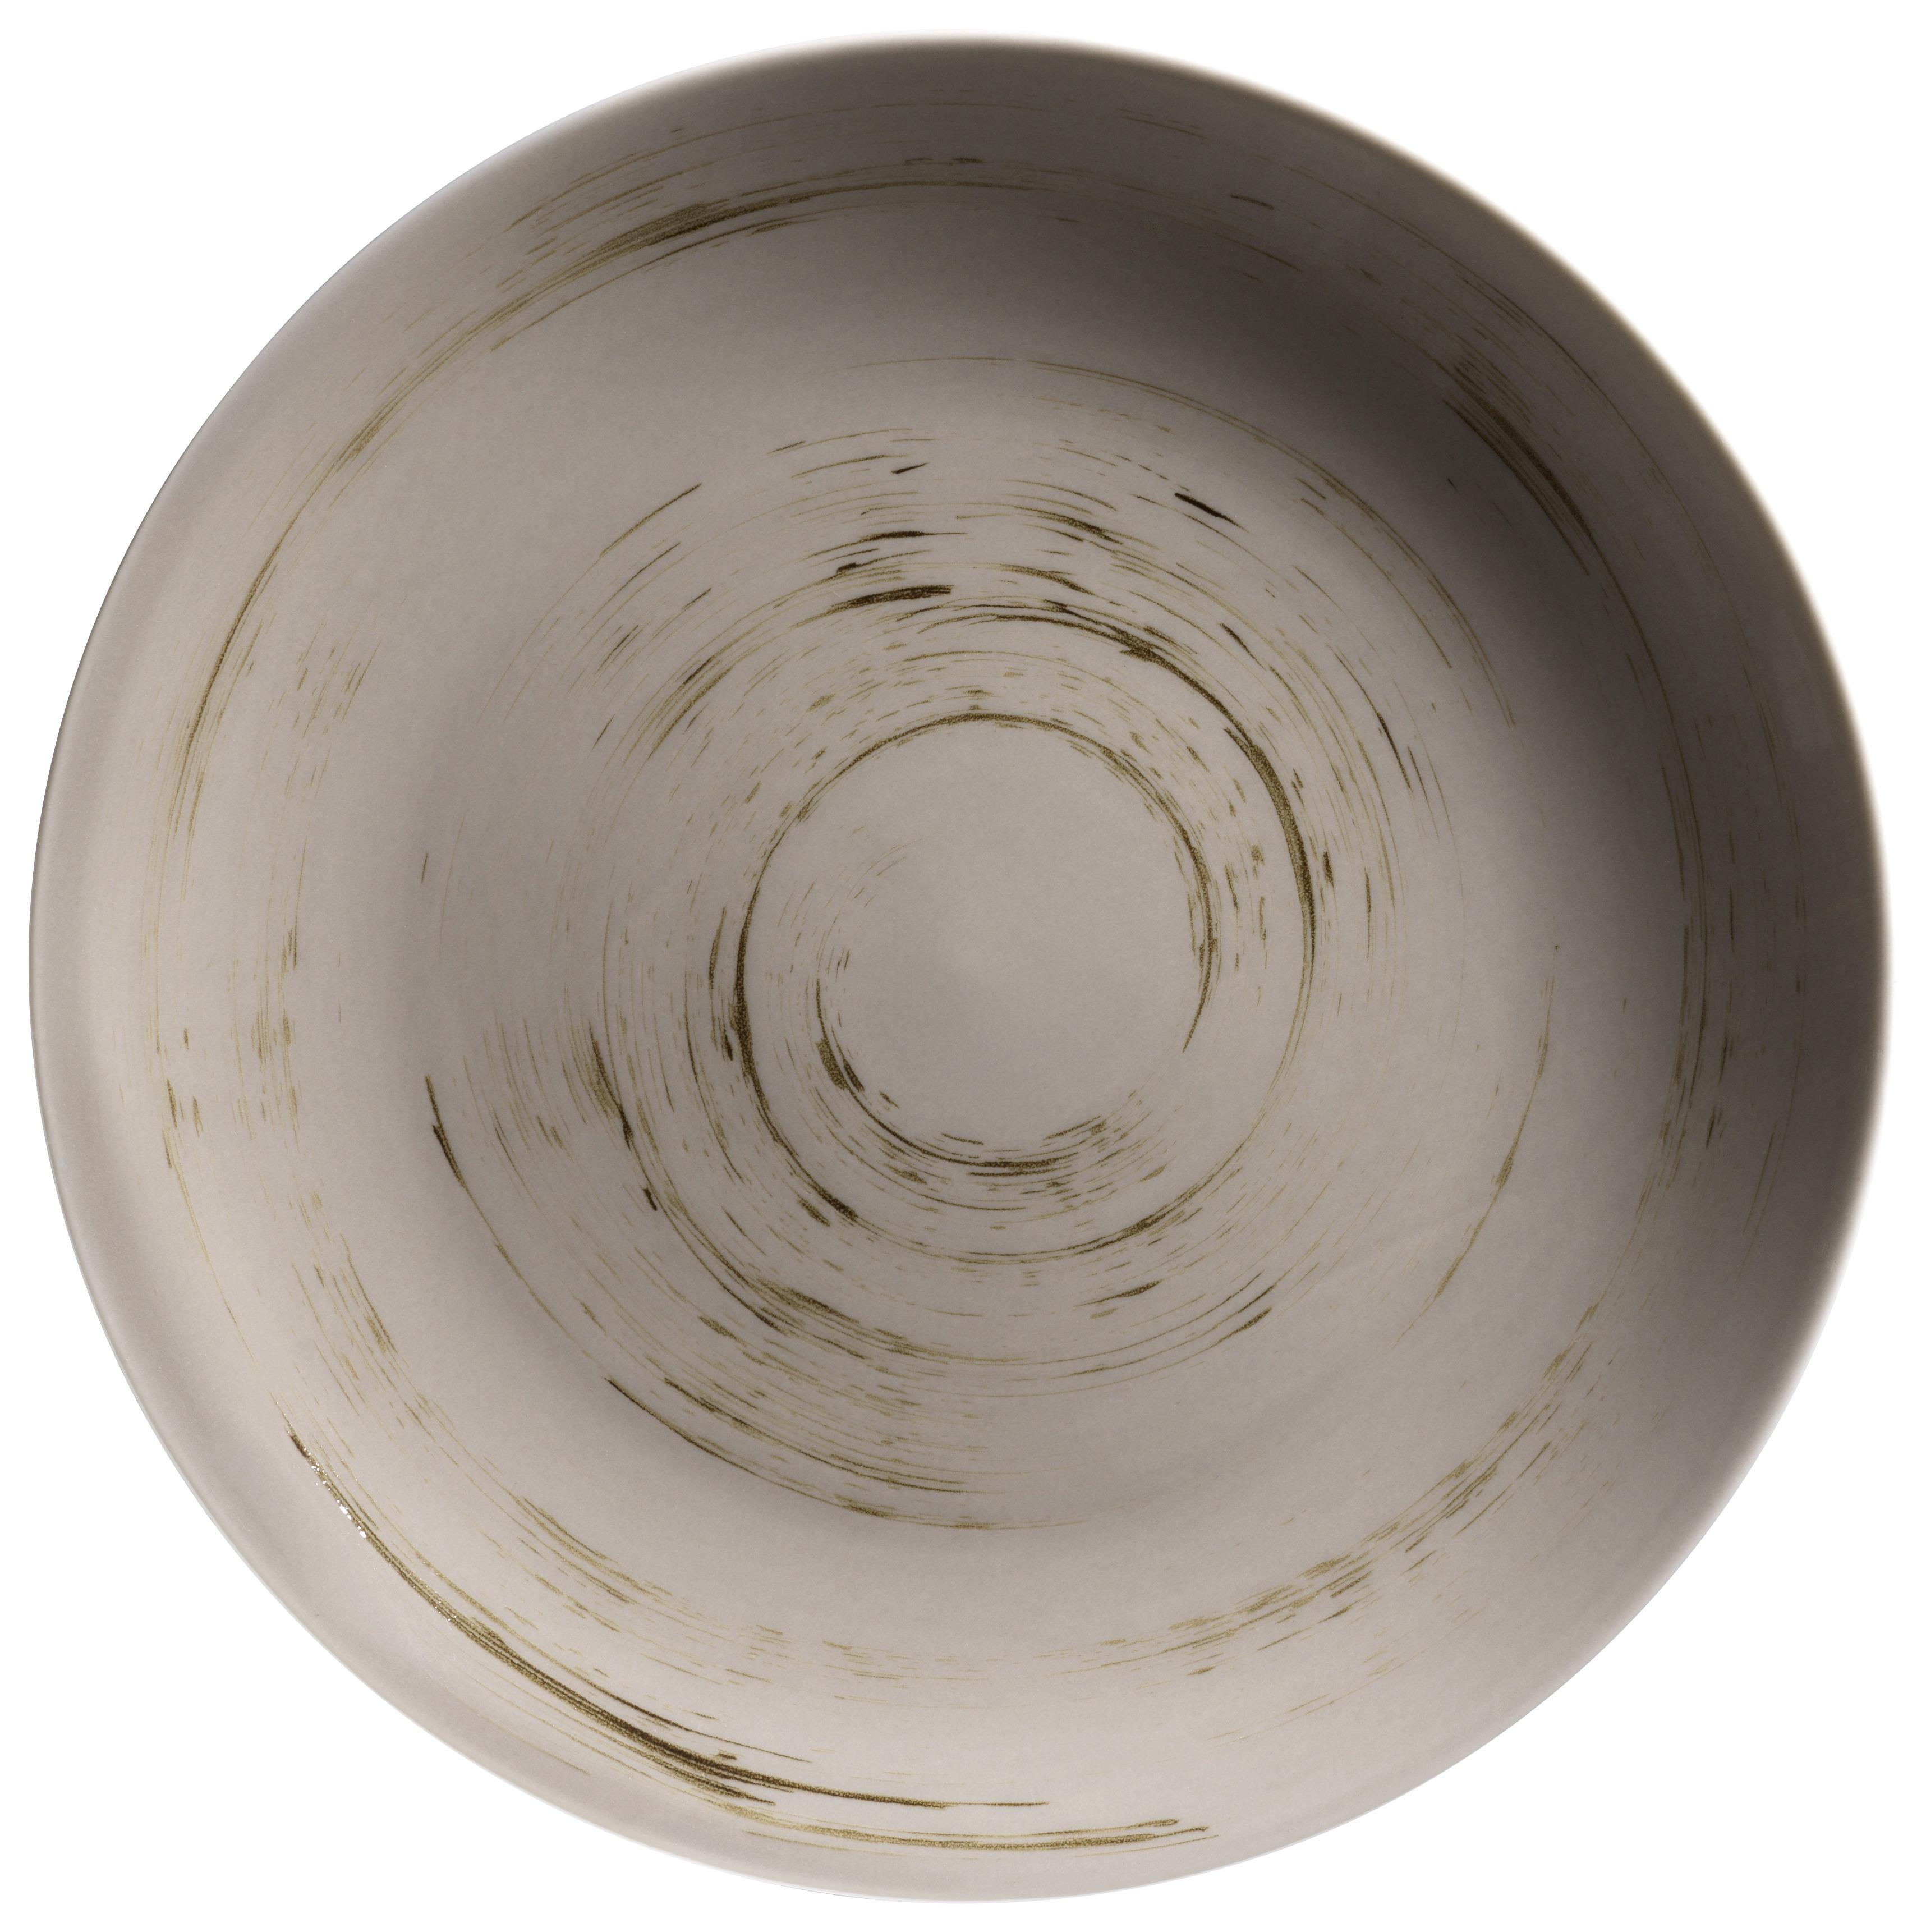 Tafelservice Derby aus Porzellan, 12-teilig - Beige, Basics, Keramik (32/32/30cm) - Mäser